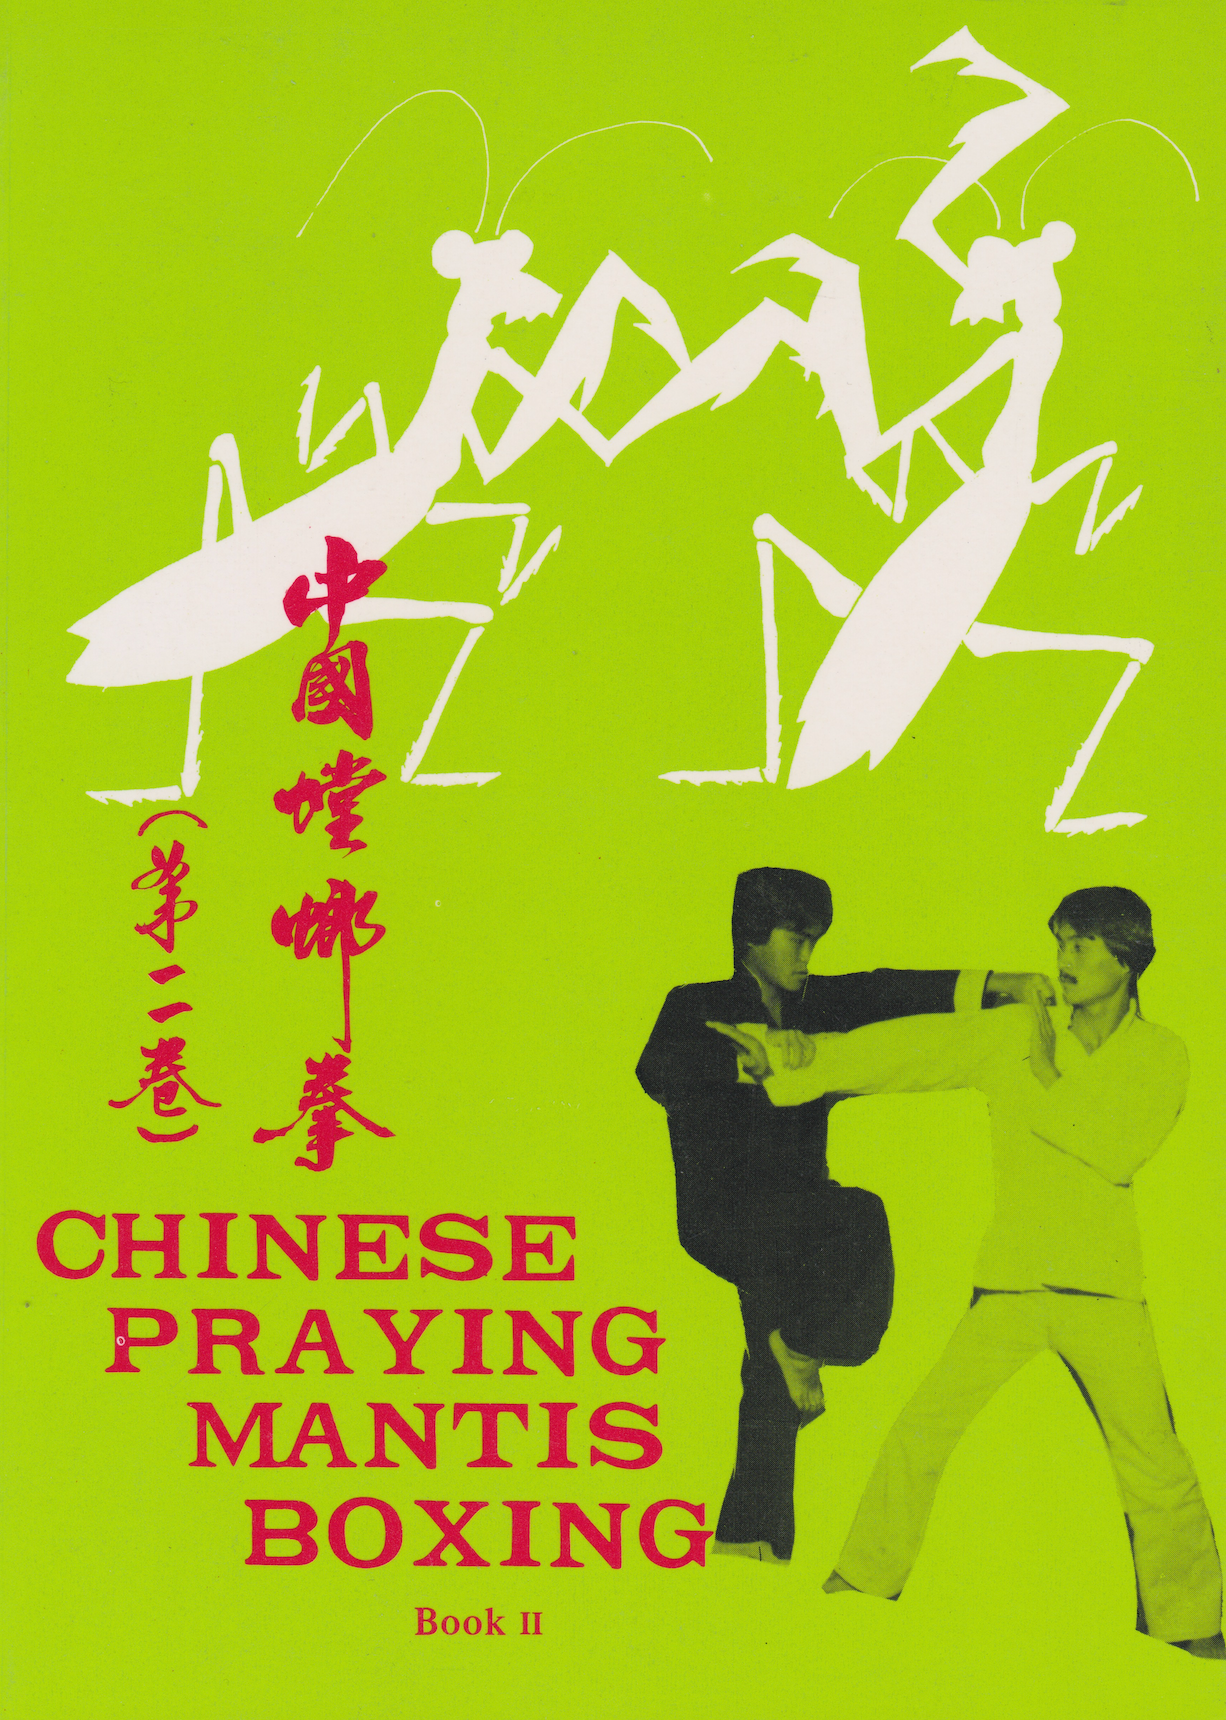 Chinese Praying Mantis Boxing: Book II by HC Chao